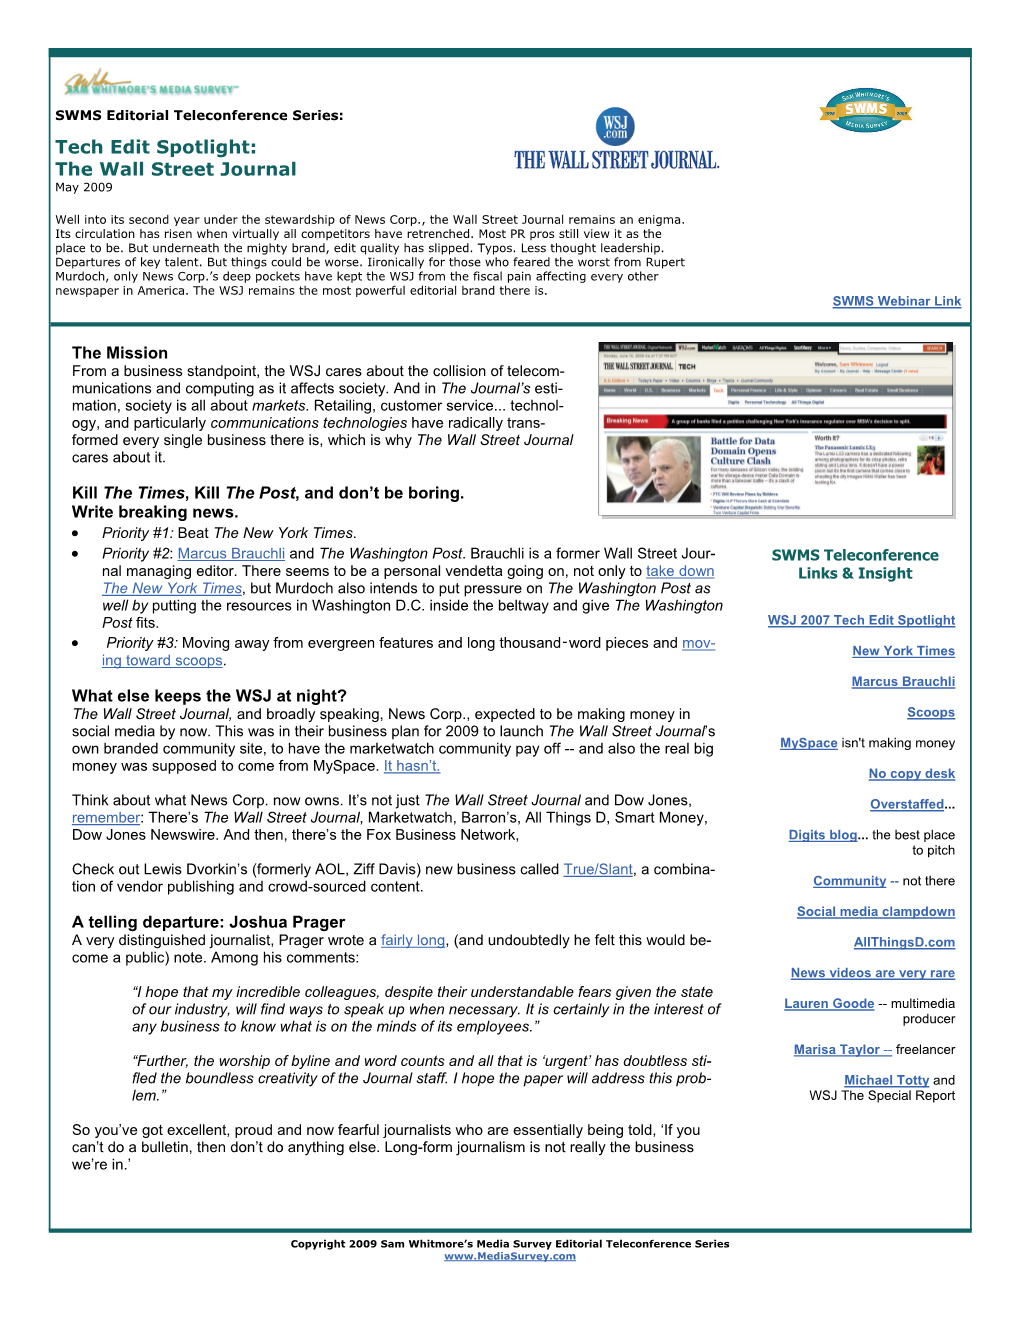 Tech Edit Spotlight: the Wall Street Journal May 2009